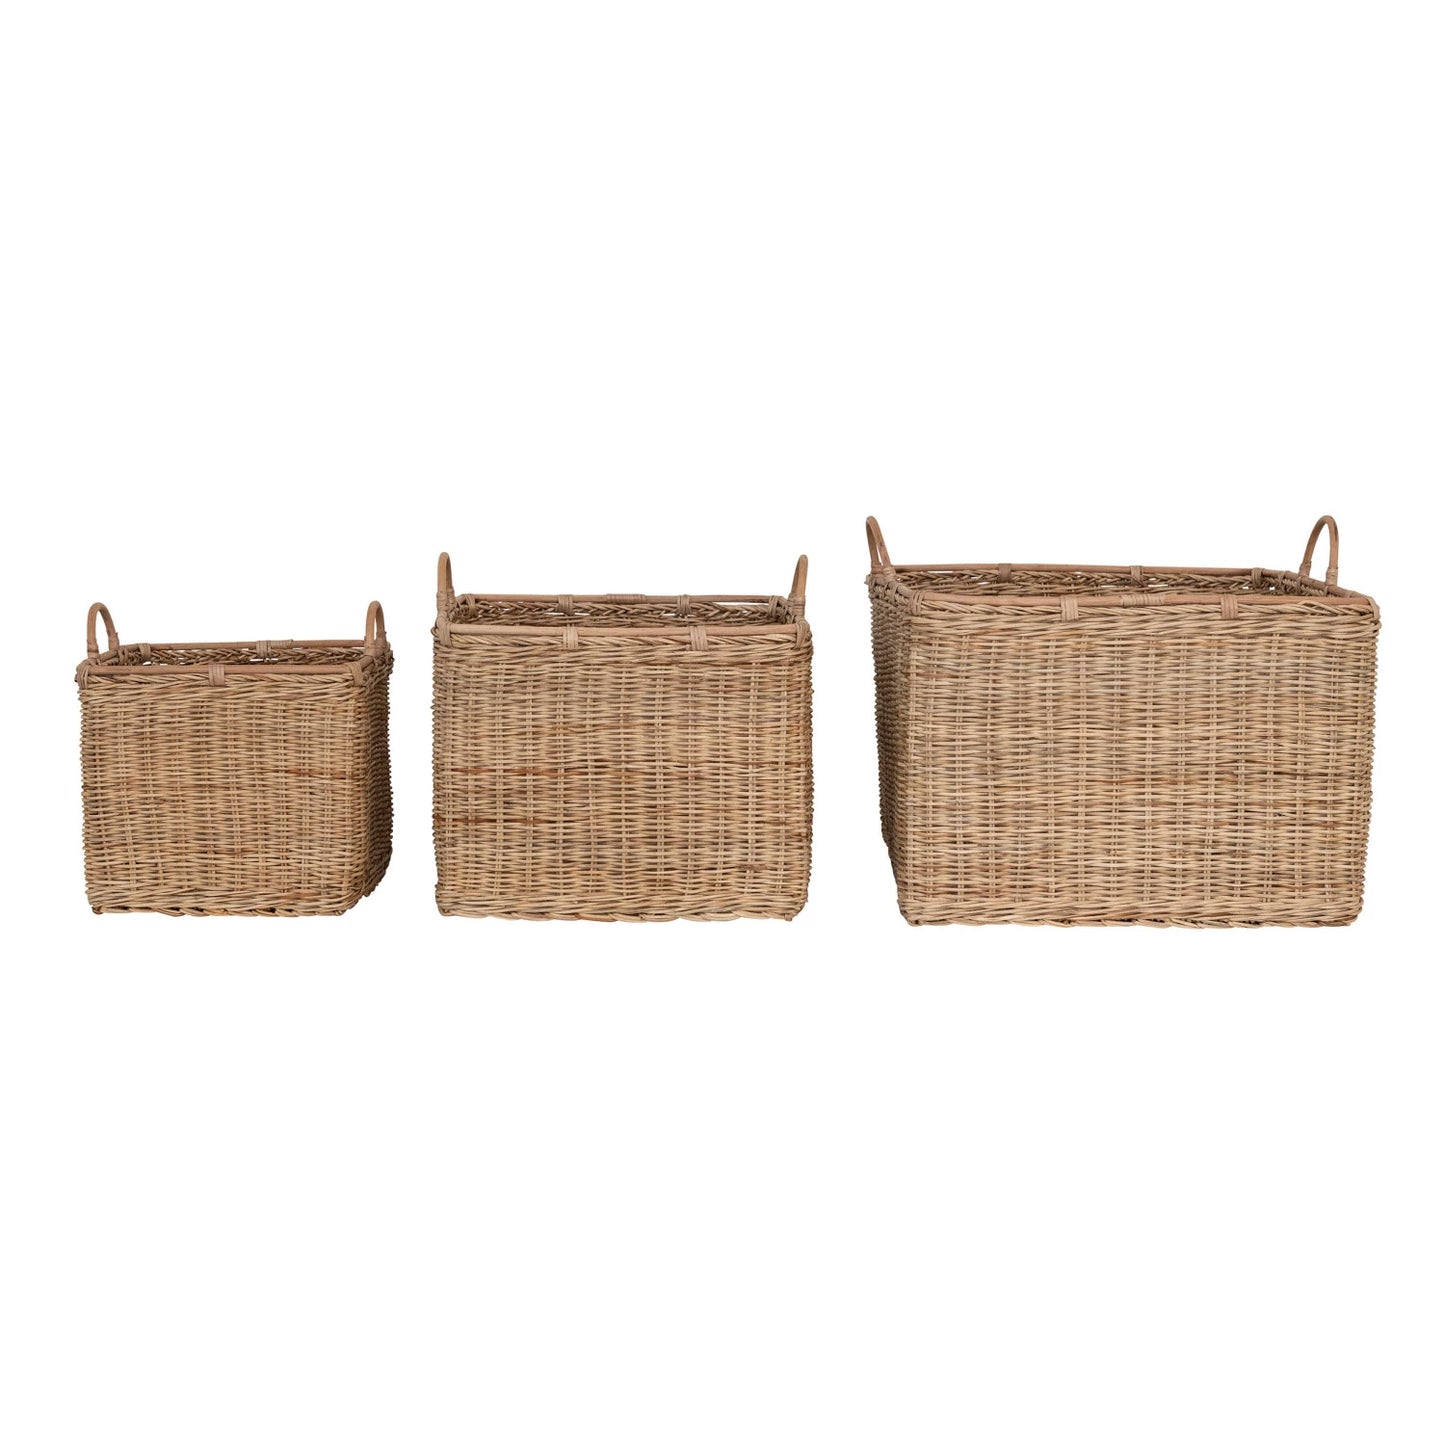 Rattan Baskets w/ Handles, 3 Sizes